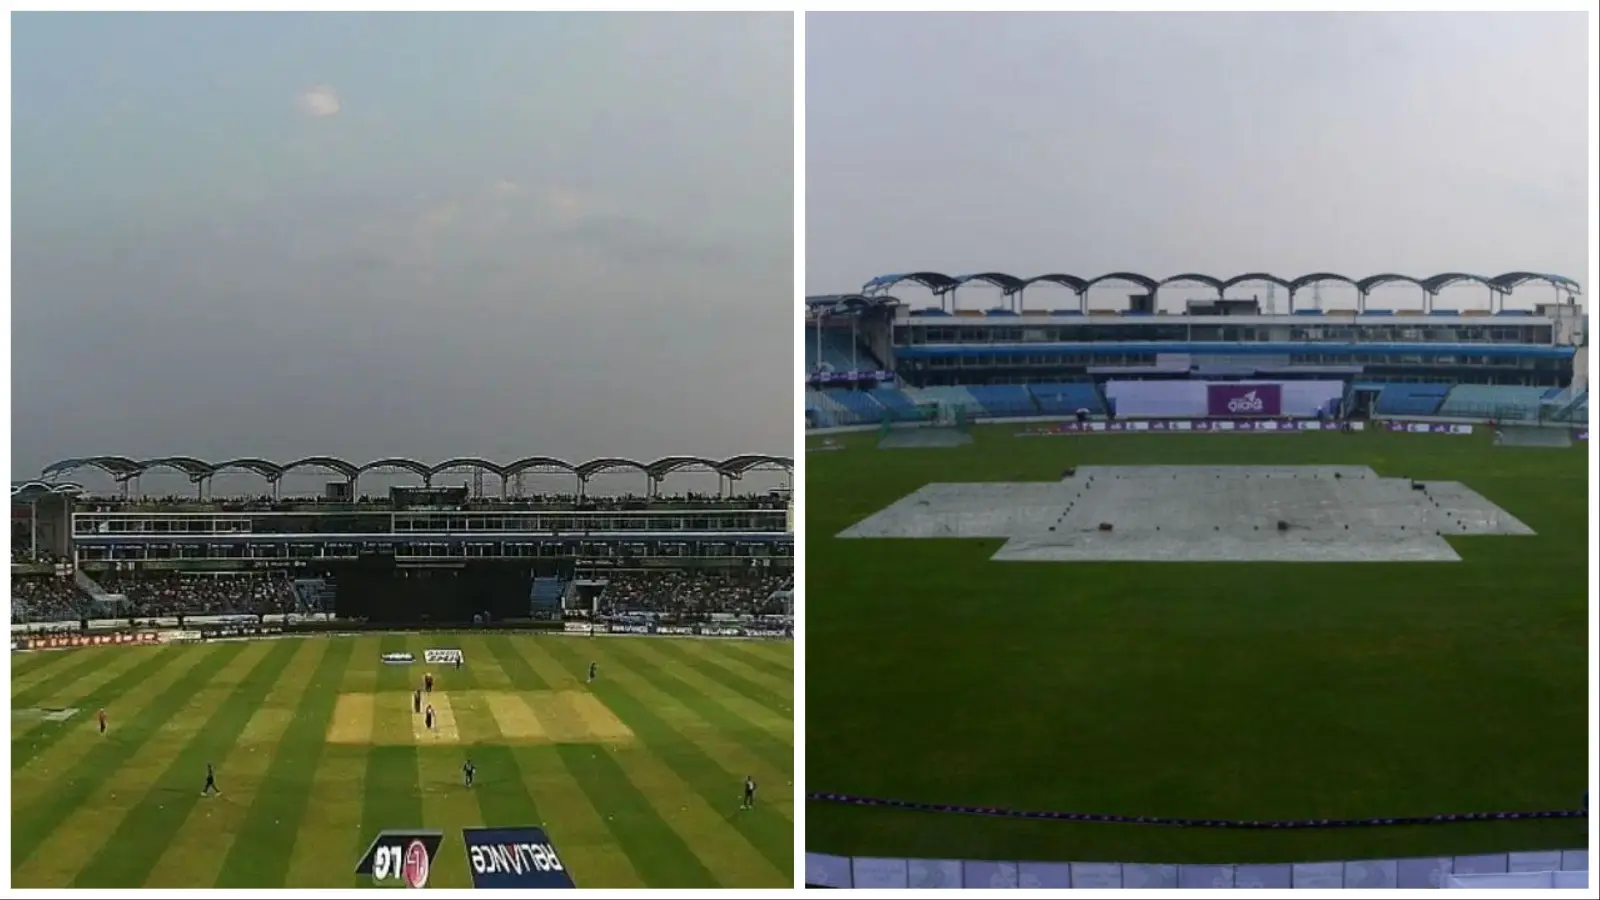 Zahur Ahmed Chowdhury Stadium Chattogram Boundary Length And Seating Capacity